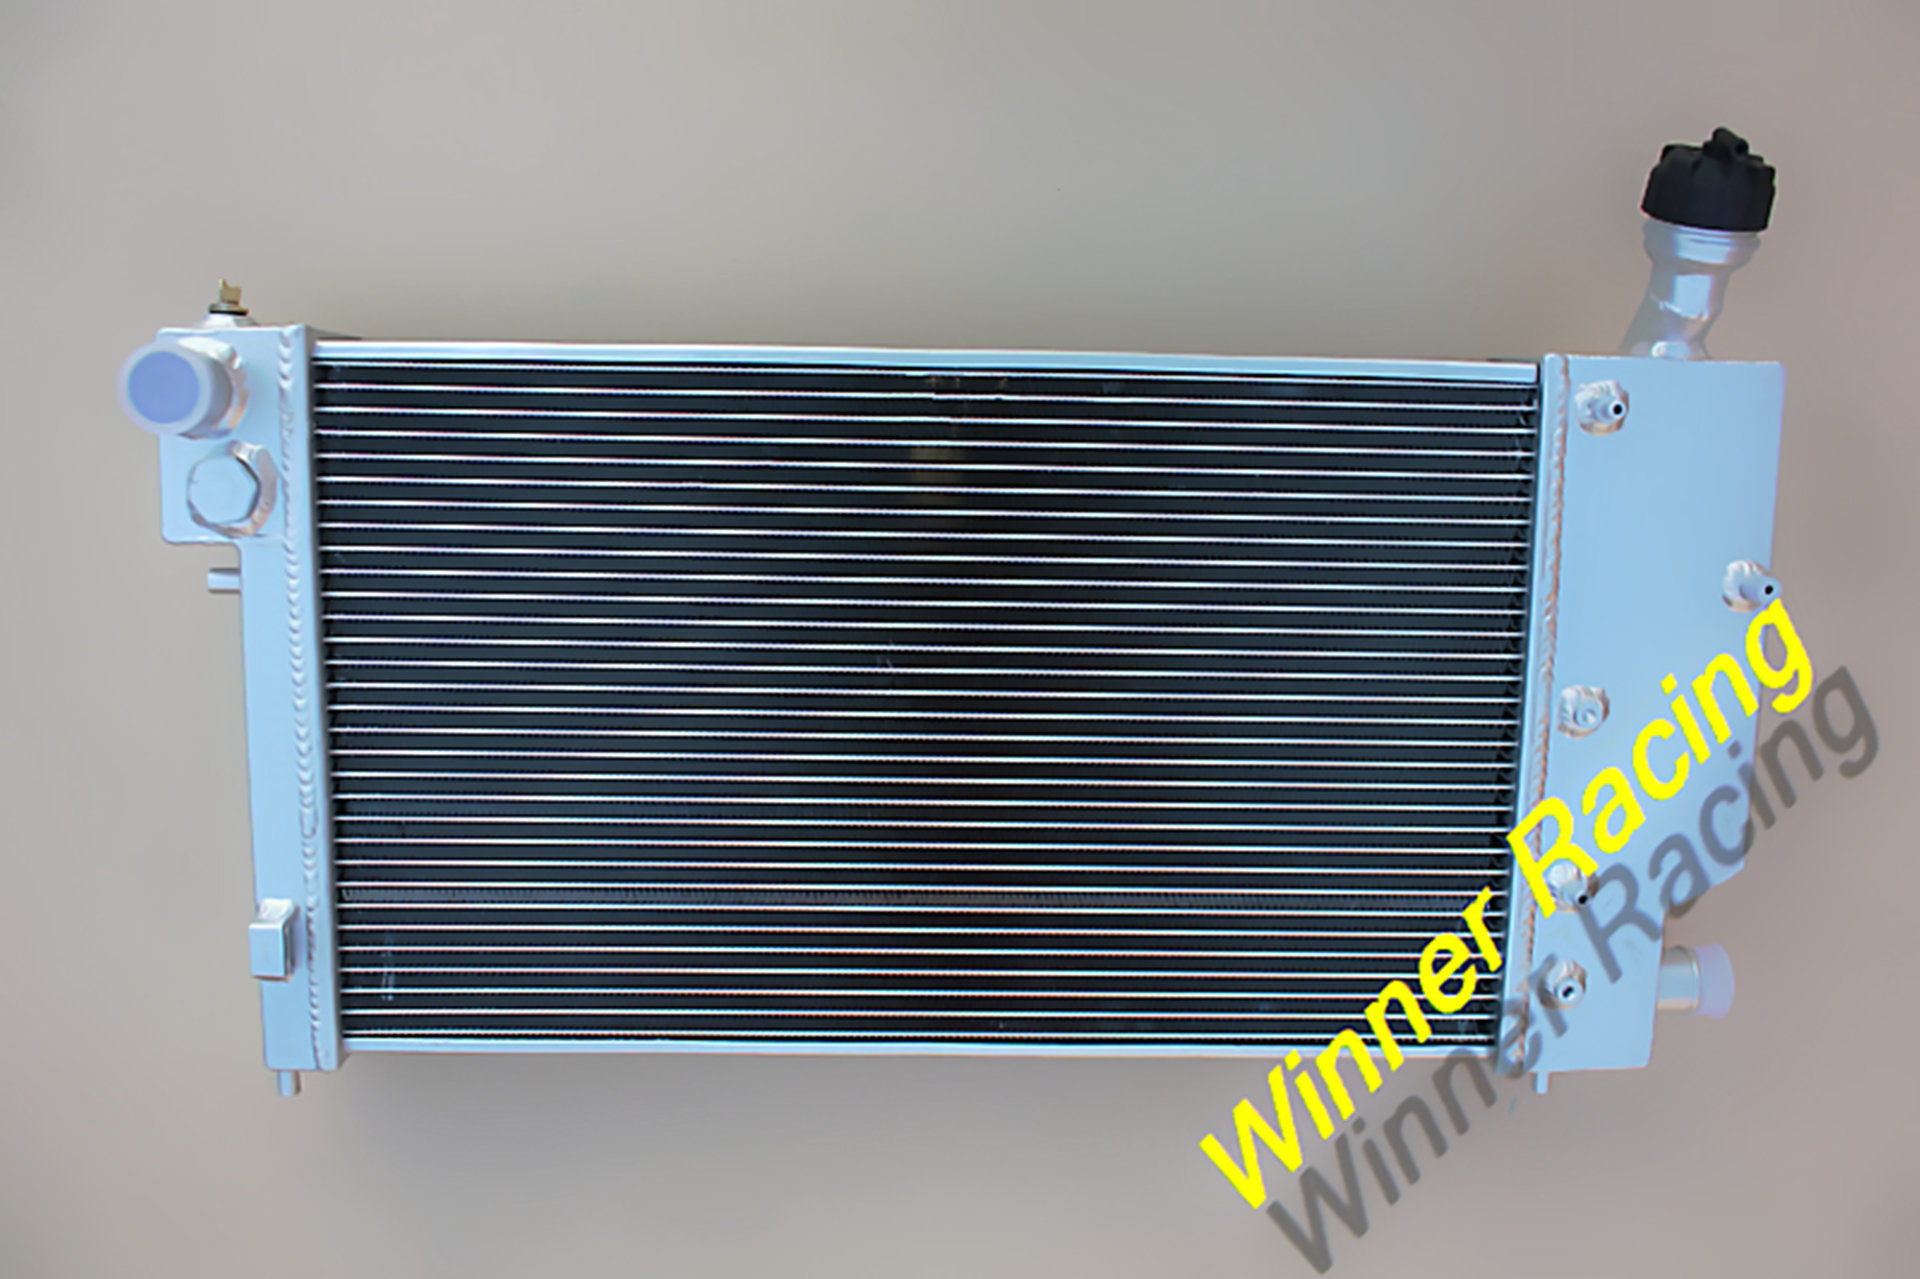  50mm  Aluminum radiator  FIT PEUGEOT 106 GTI RALLYE/CITROEN SAXO/VTR 1991-2001